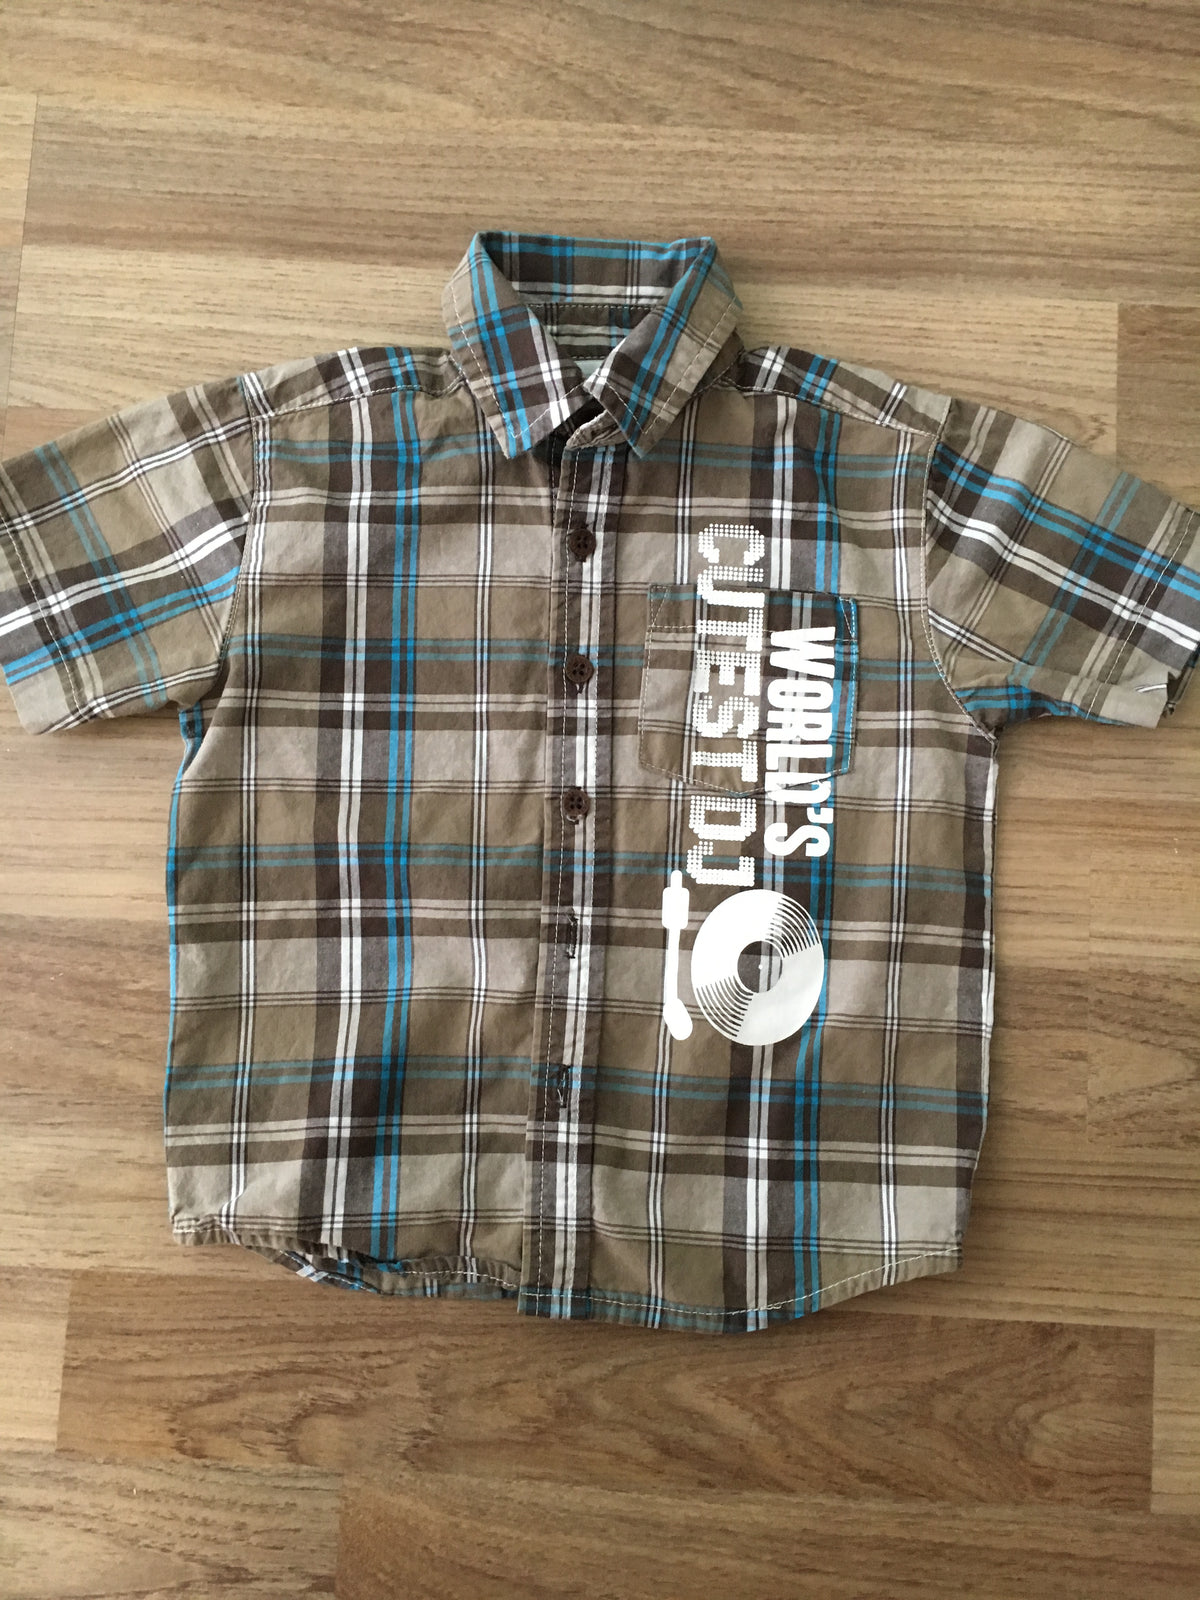 Full Button Up Shirt (Boys Size 12-18M)